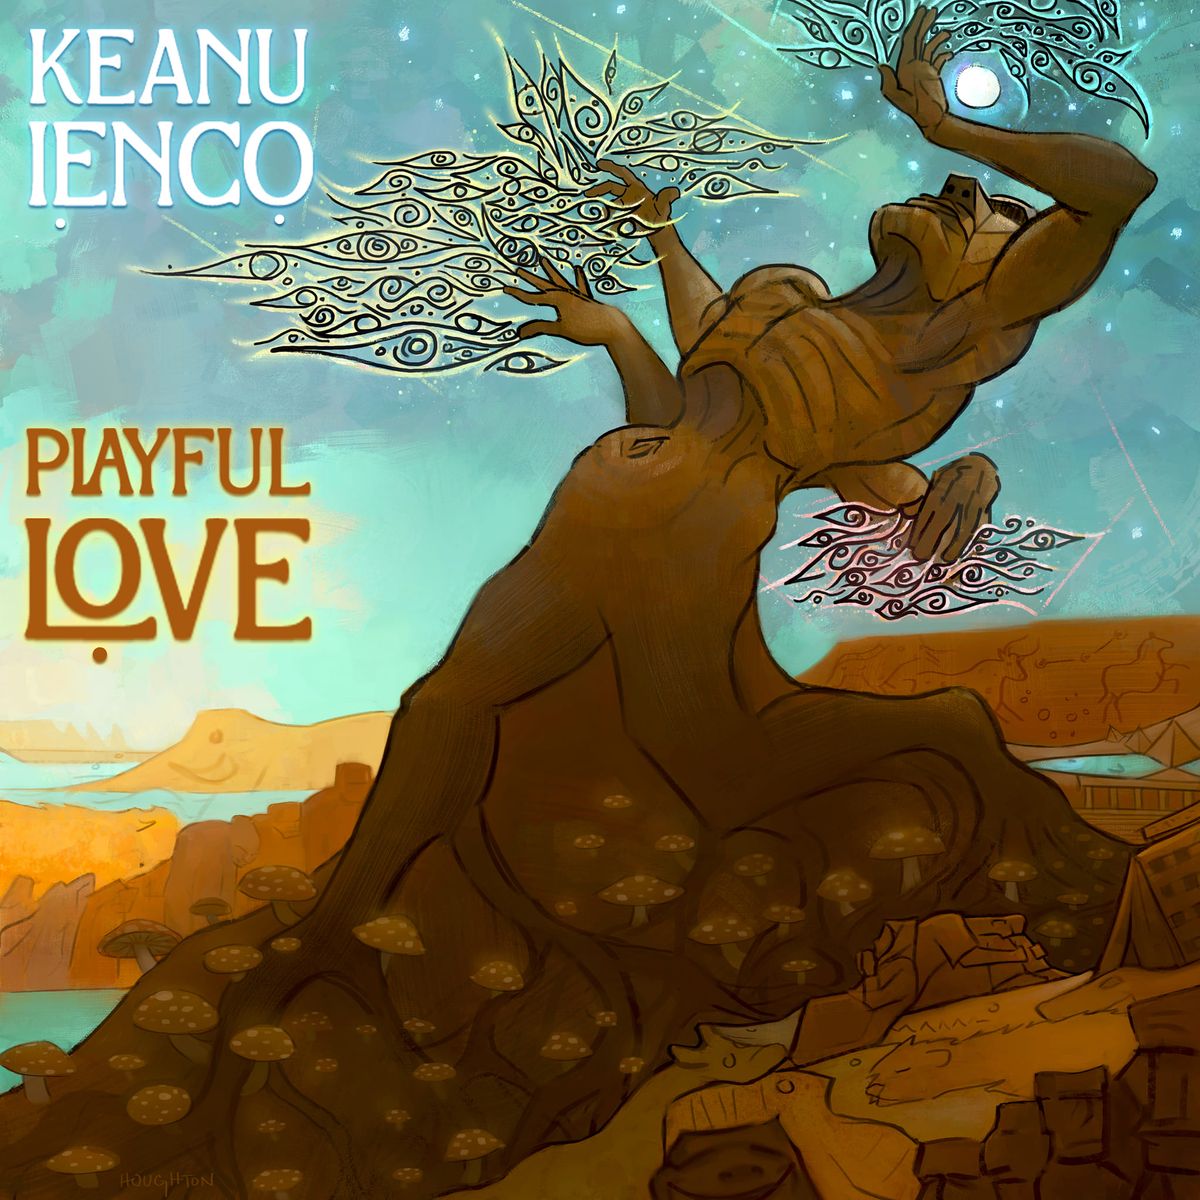 Keanu Ienco "Playful Love" Release Show!